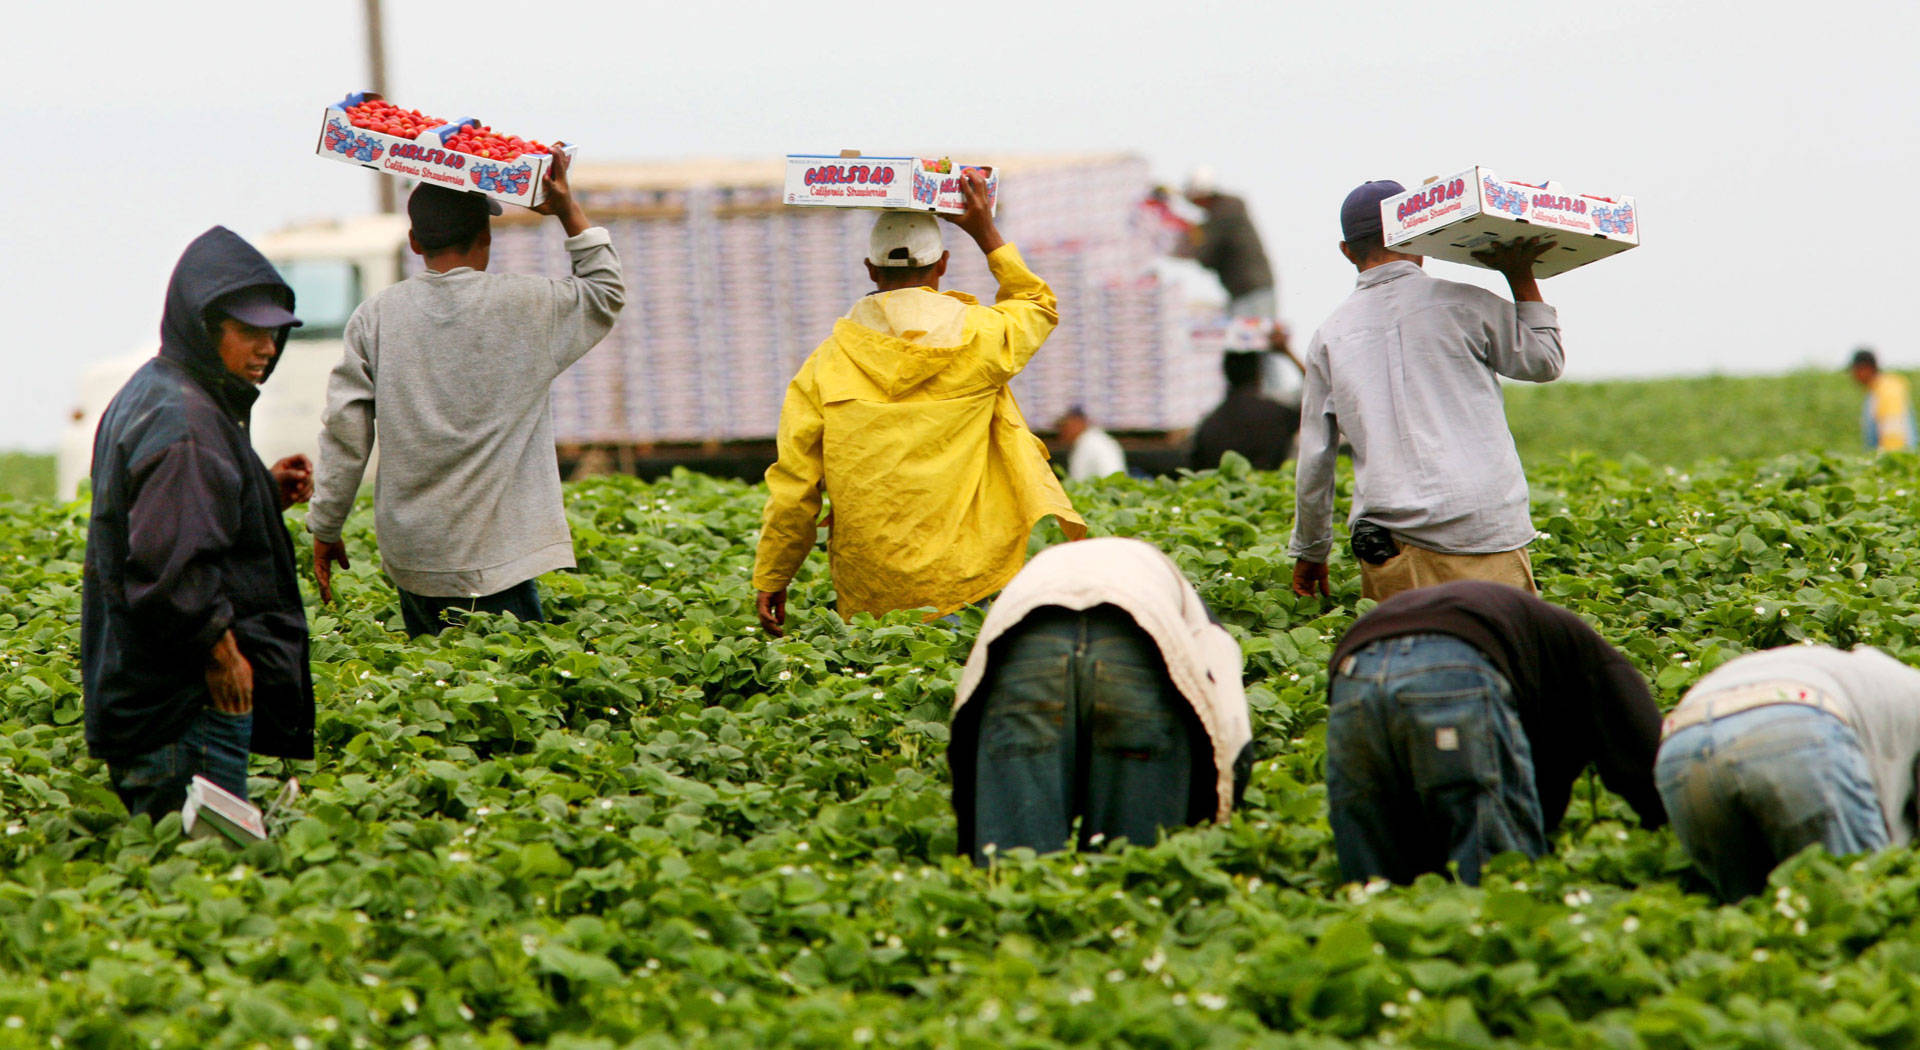 Farmworkers harvest strawberries in Carlsbad. Sandy Huffaker/Getty Images